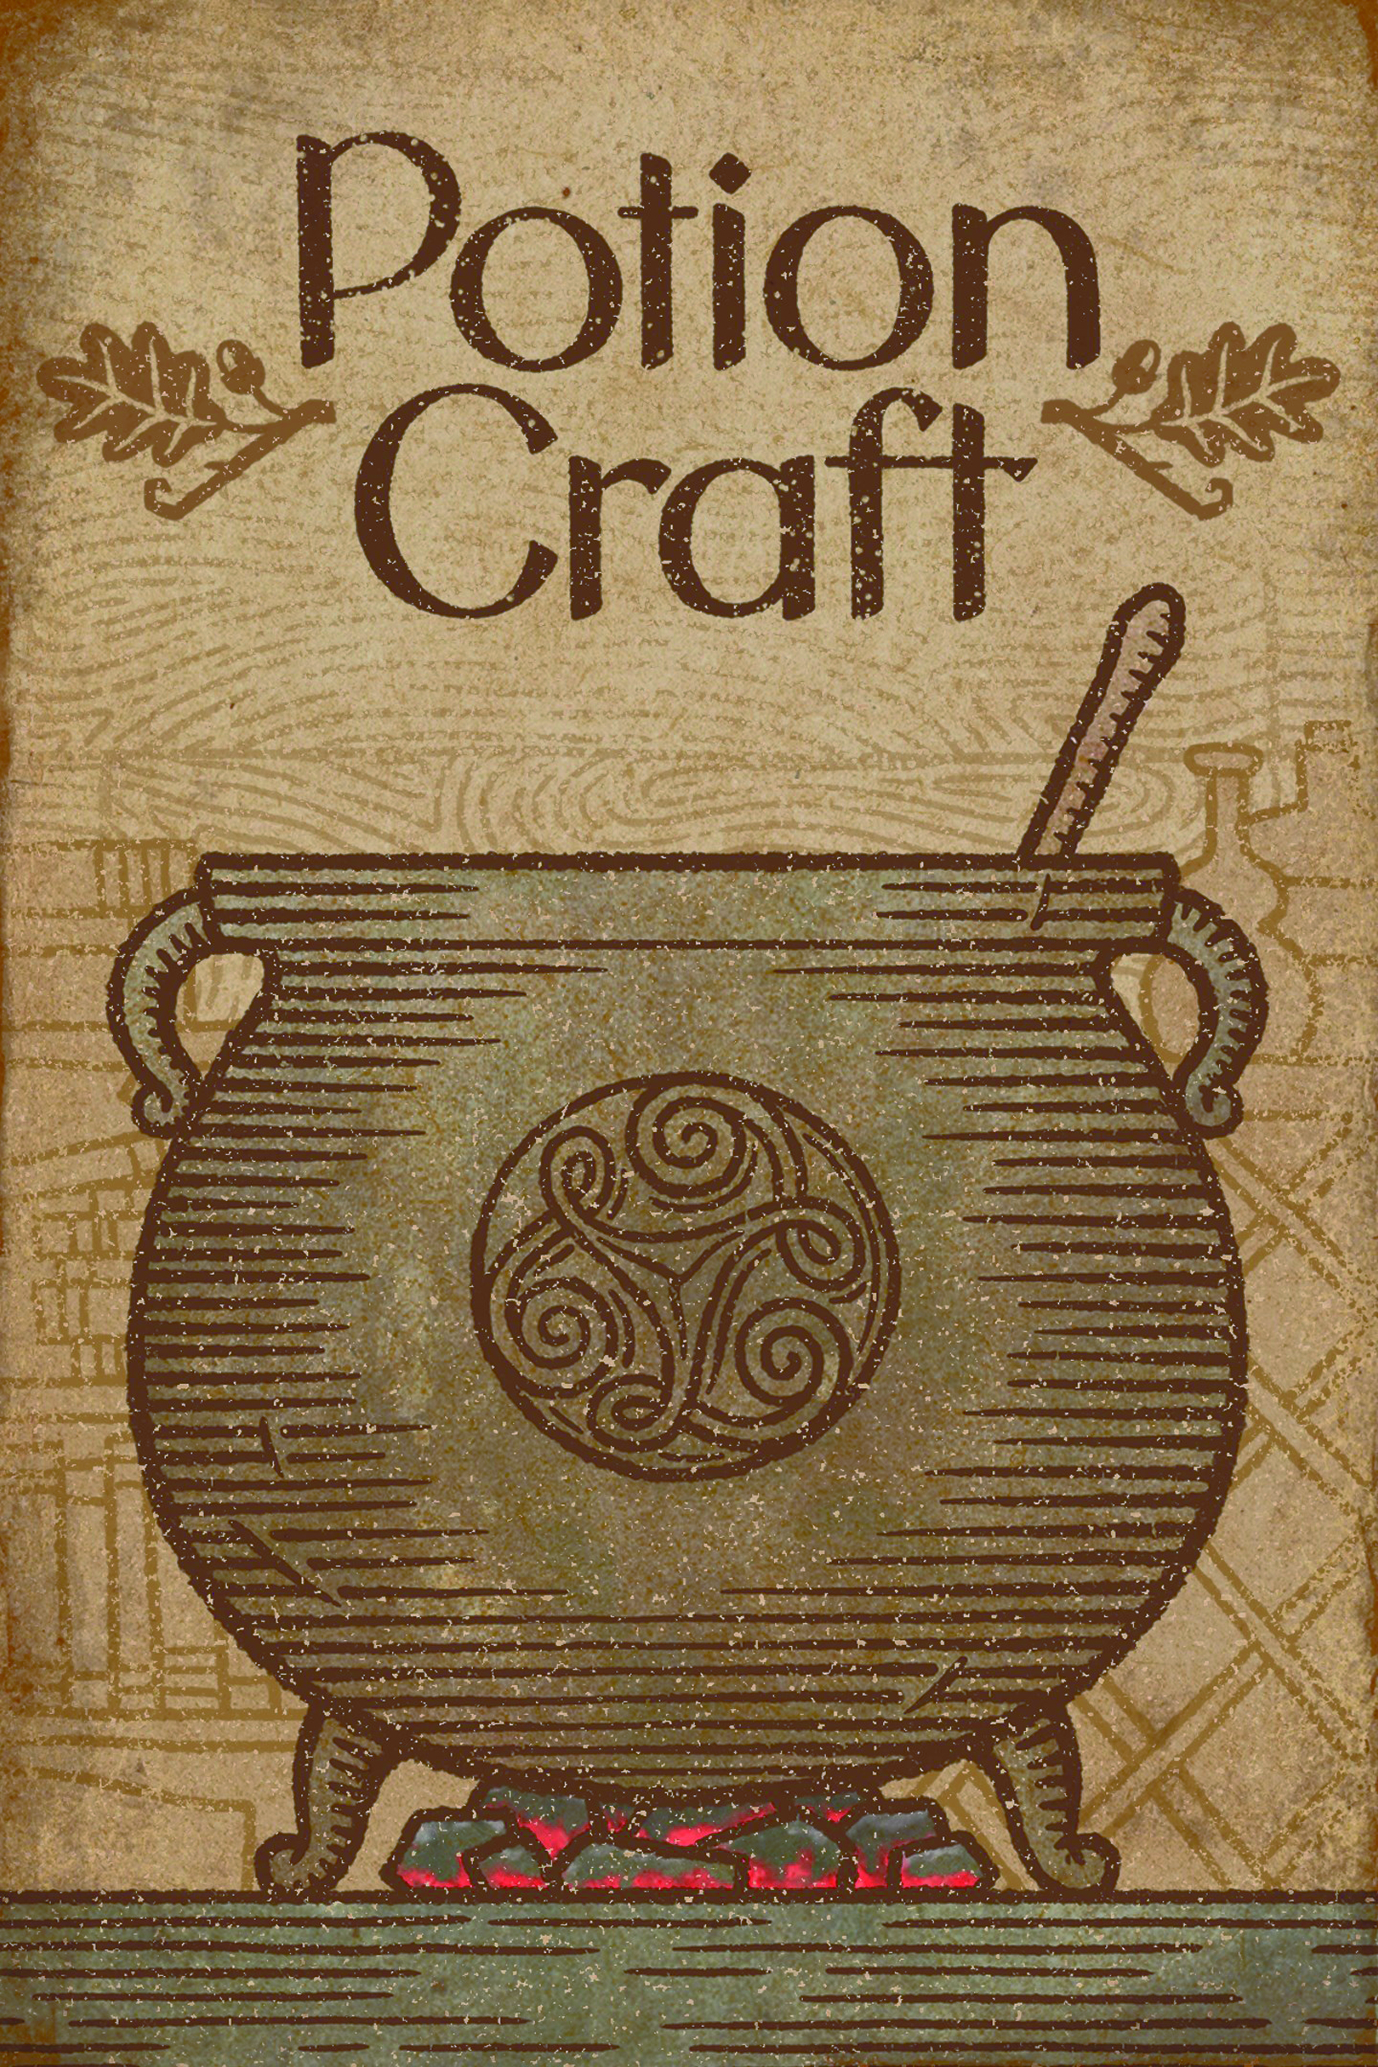 Portion Craft